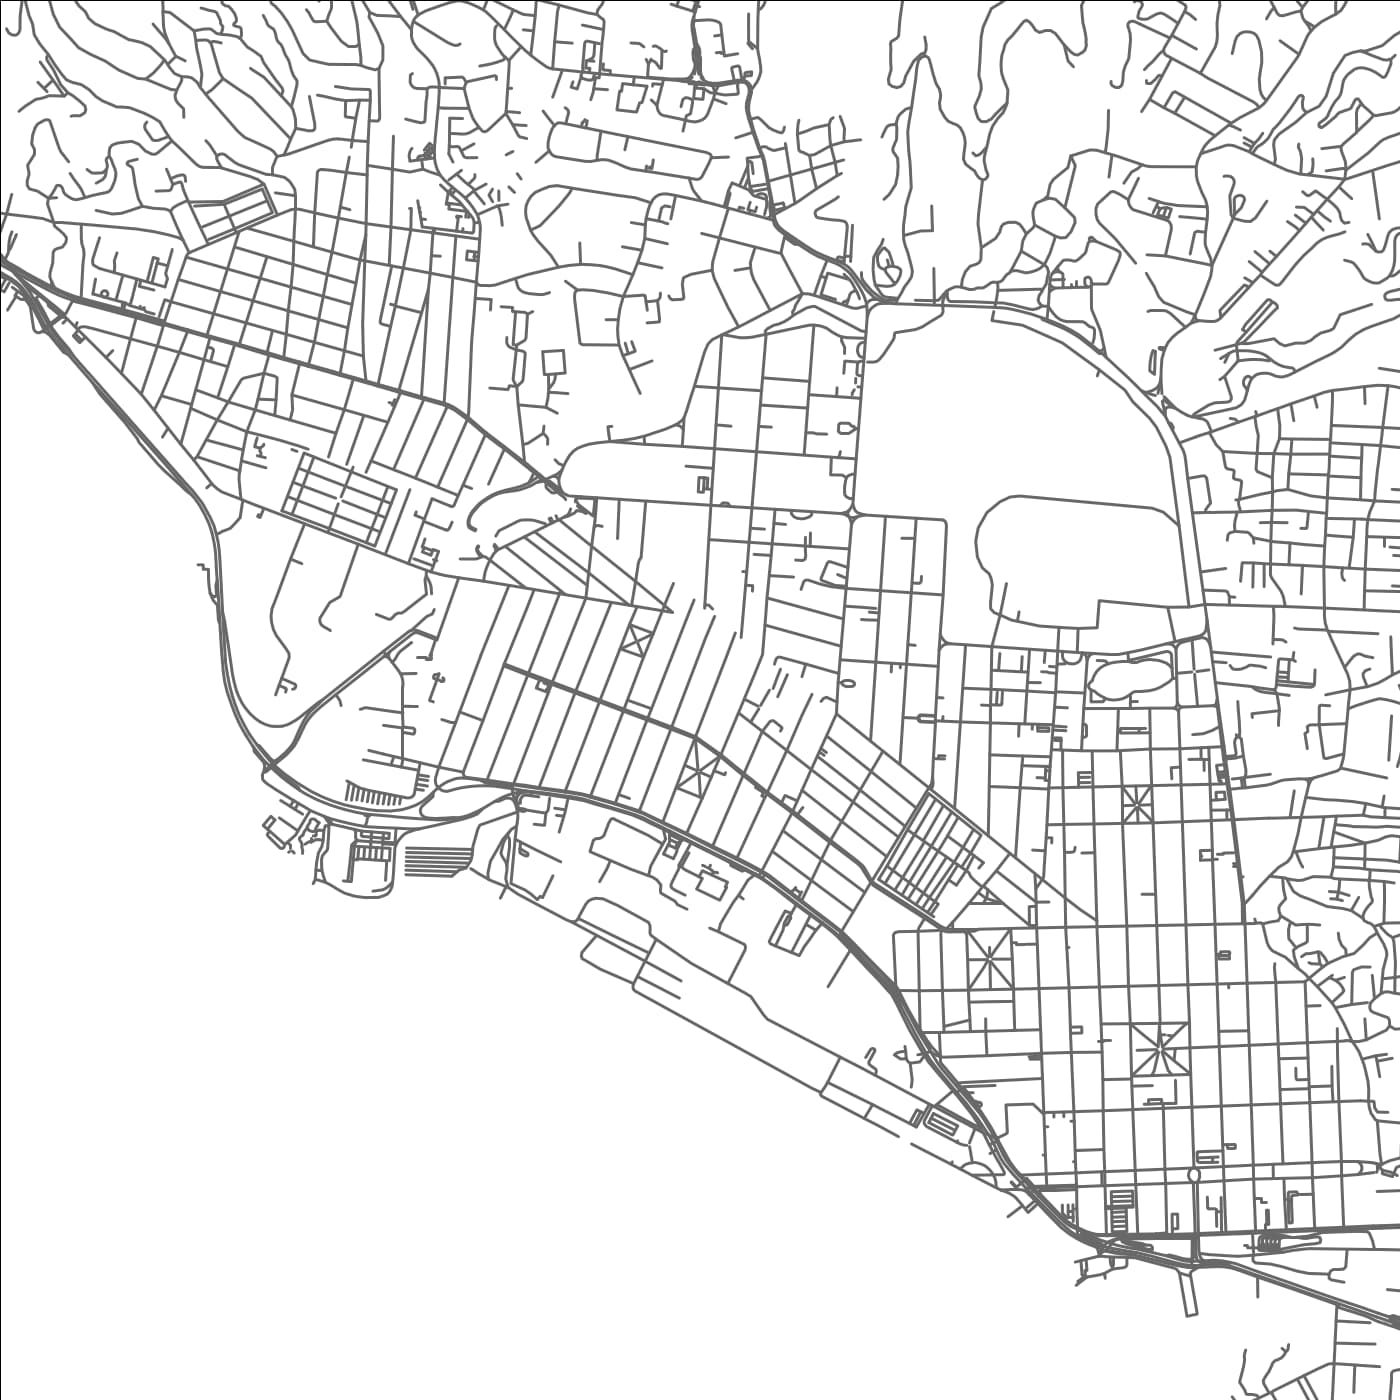 ROAD MAP OF WOODBROOK, TRINIDAD AND TOBAGO BY MAPBAKES